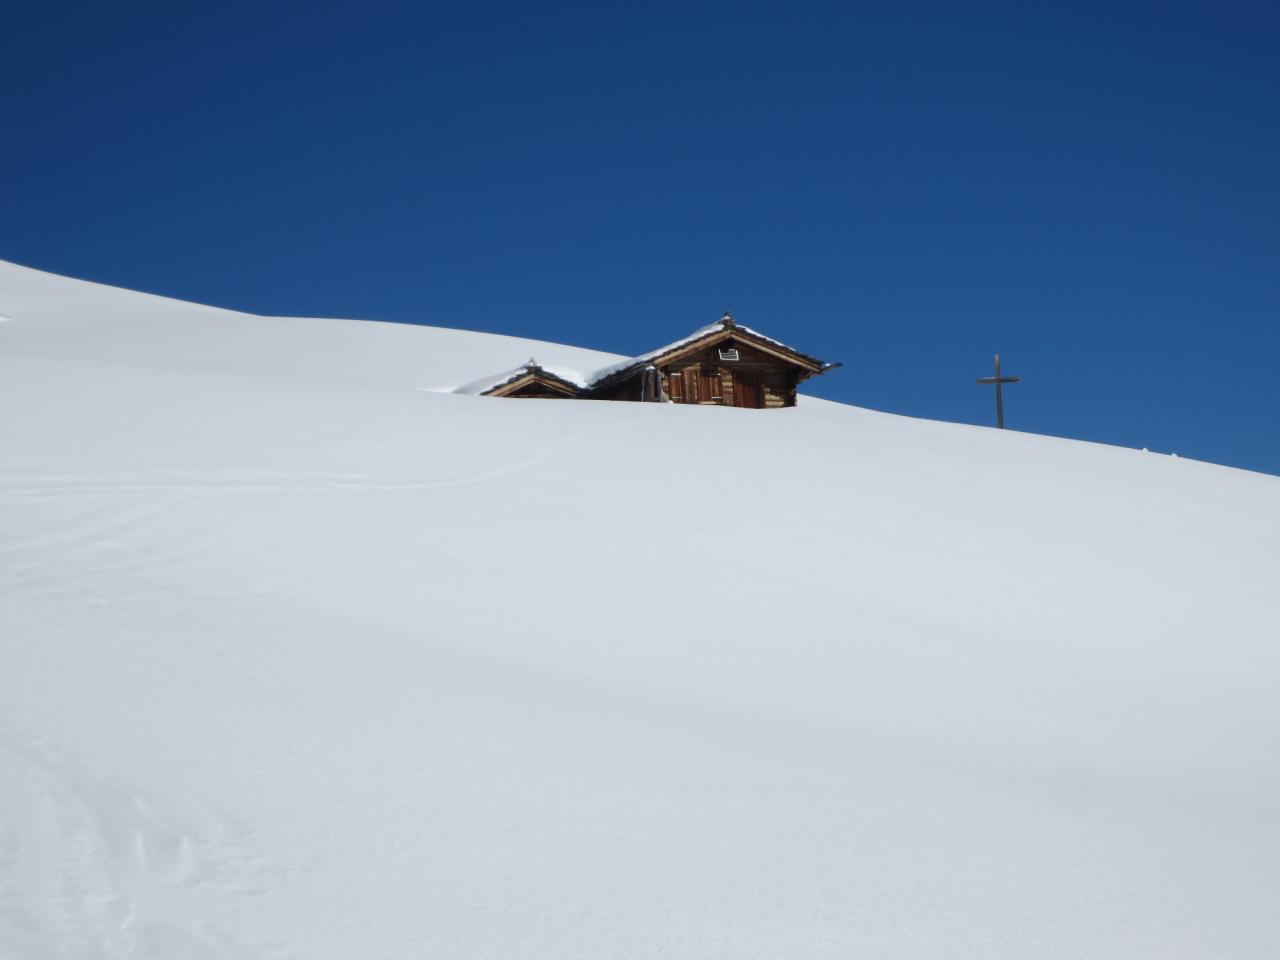 Bruno Ski Palanche, chalets de la Cretta, point 2585